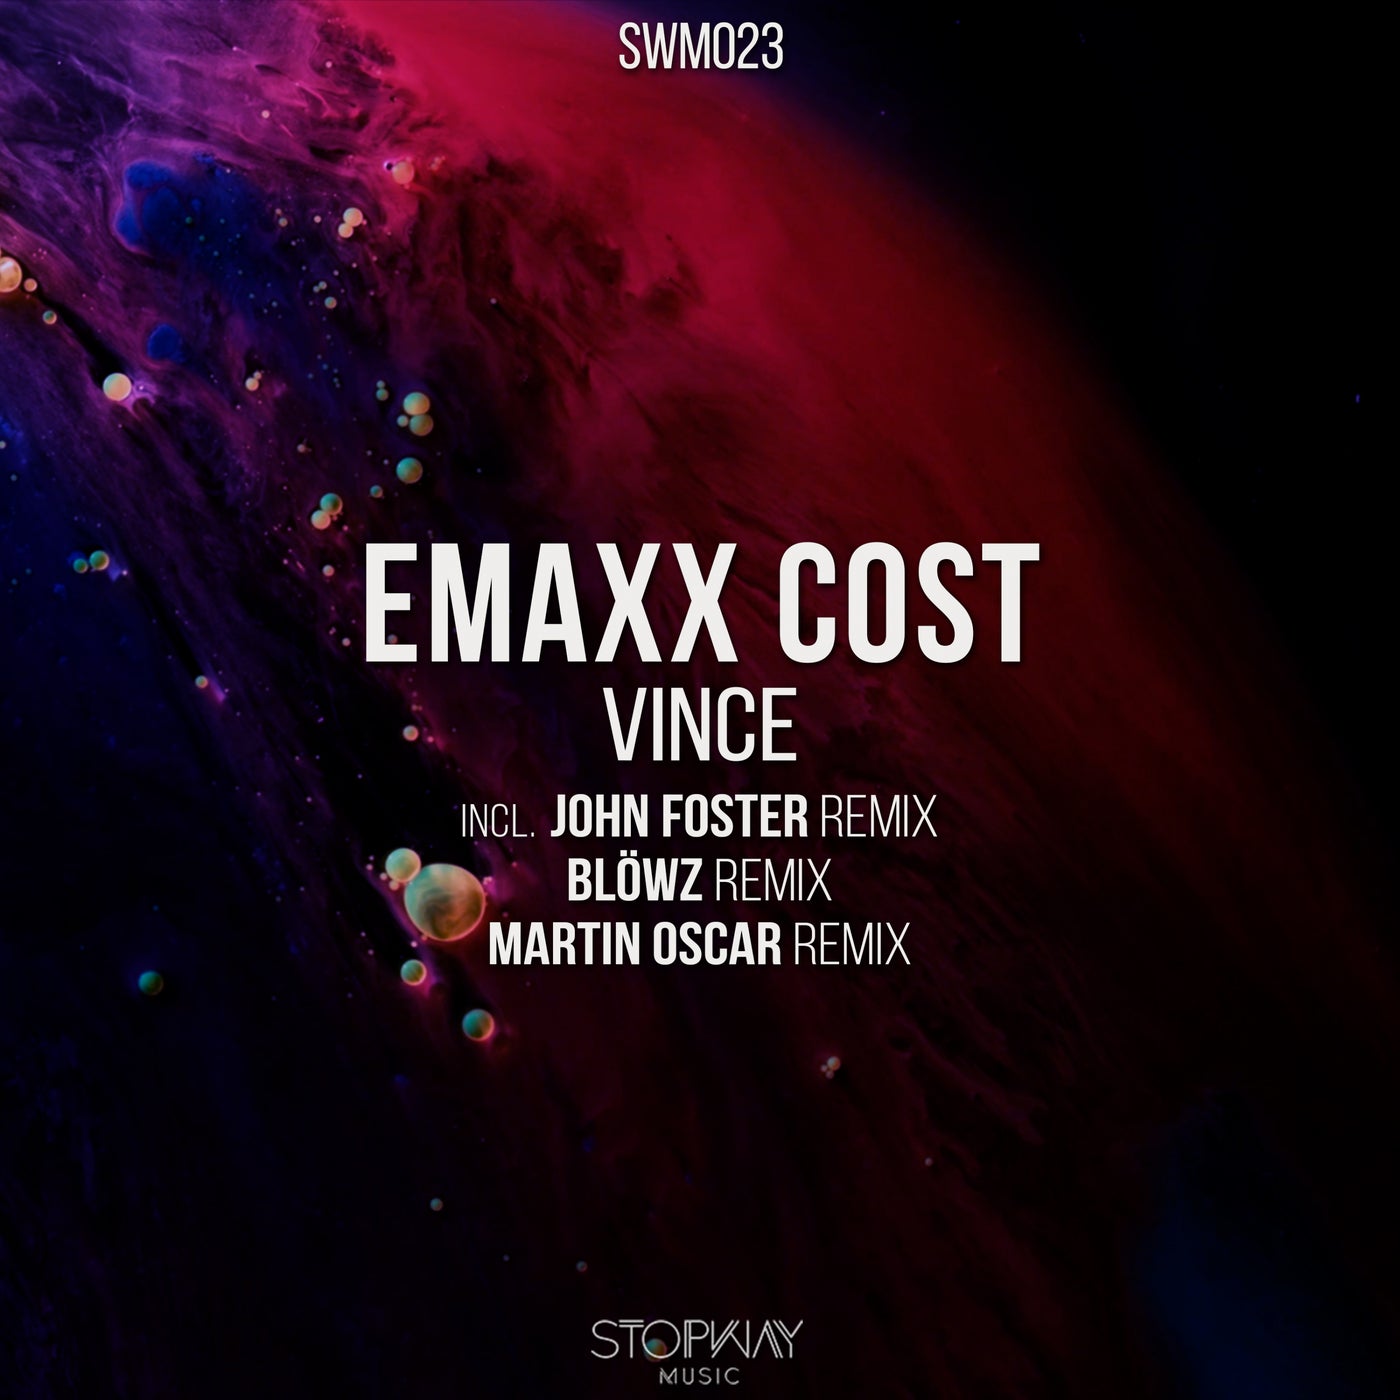 Emaxx Cost - Vince [SWM023]